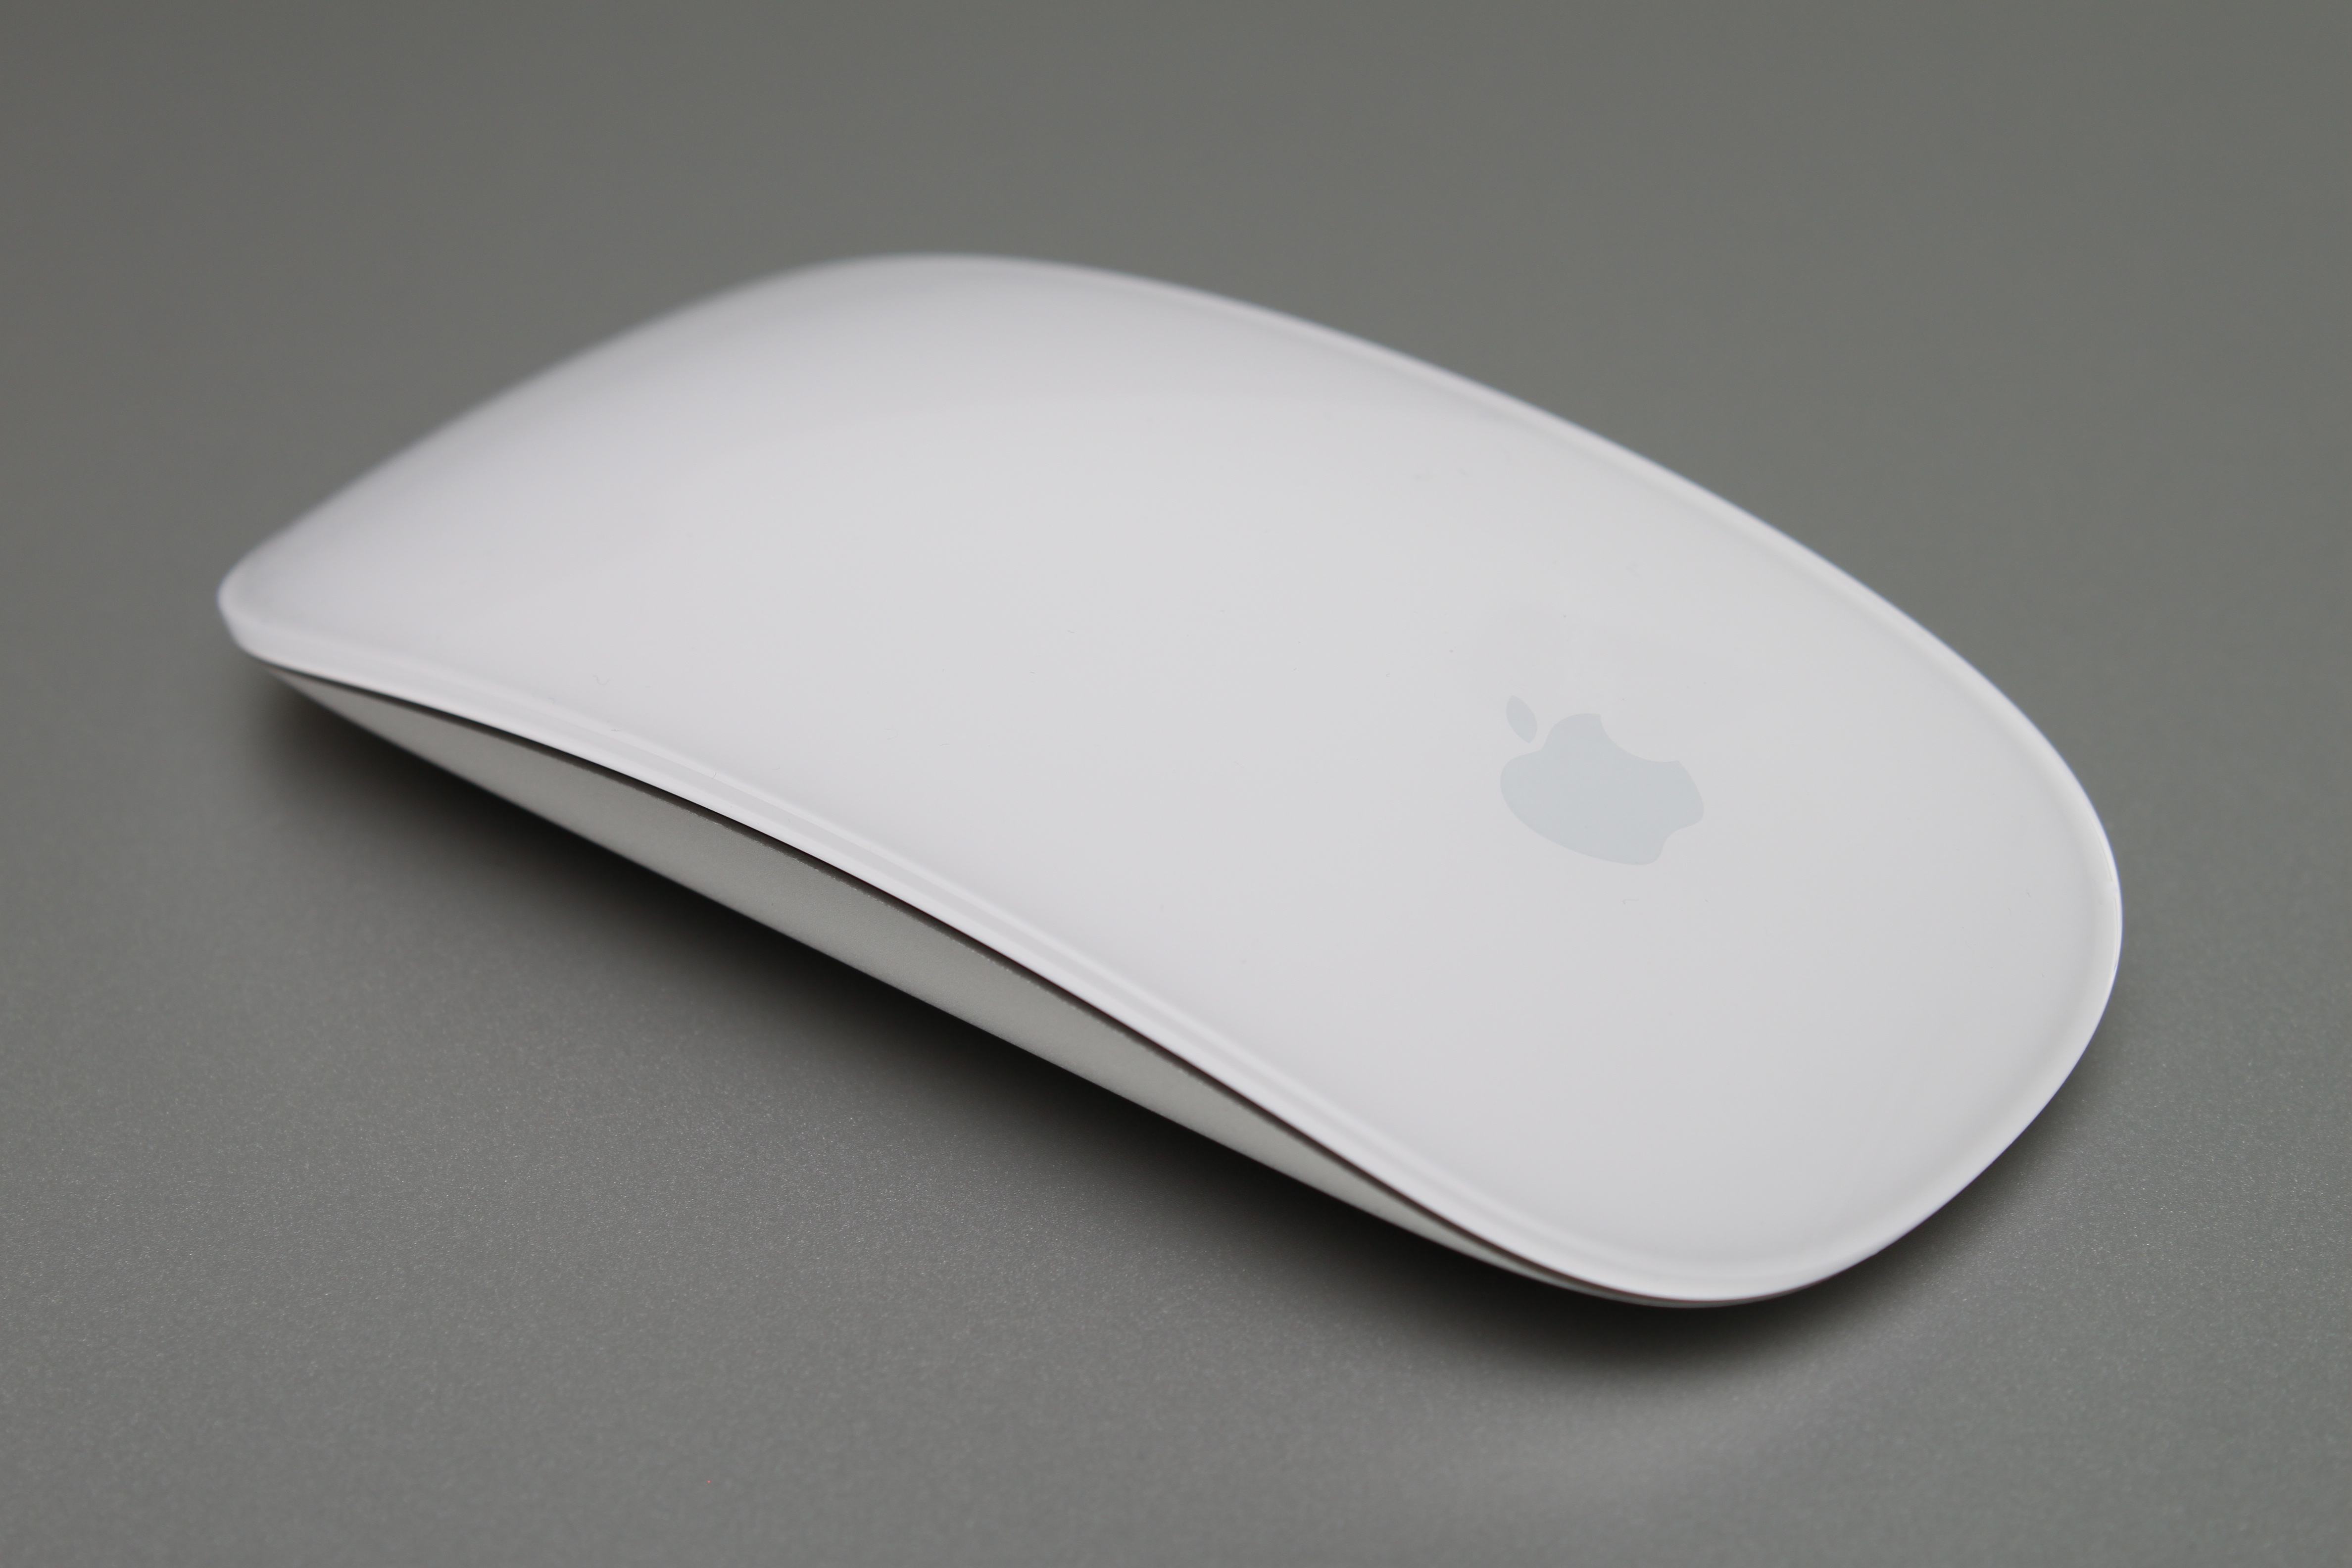 Apple's Magic Mouse